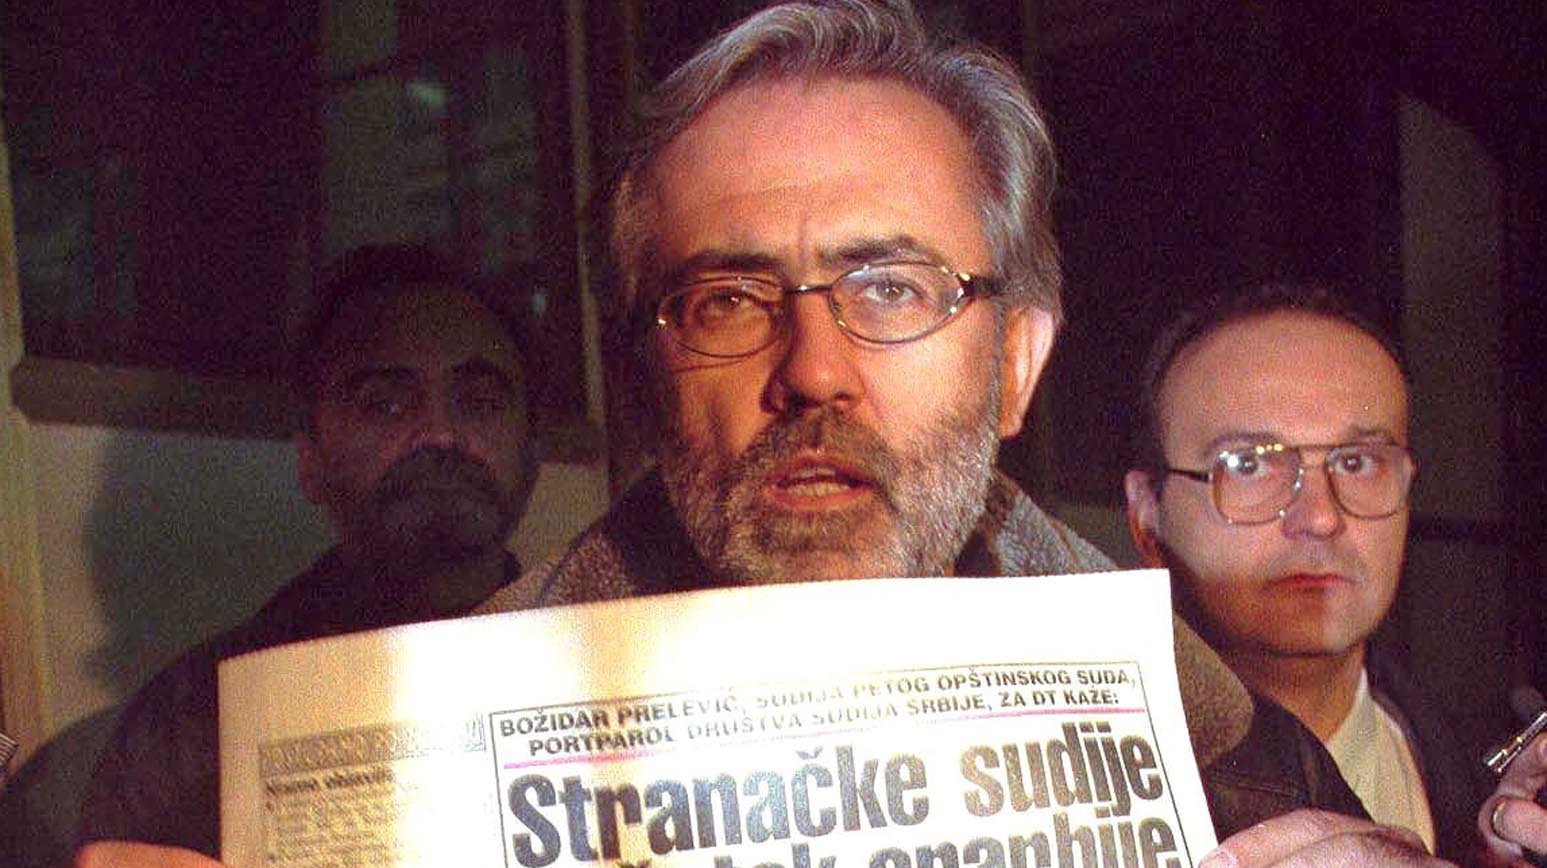 Slavko Curuvija destacado jornalista e crítico do regime de Slobodan Milosevic